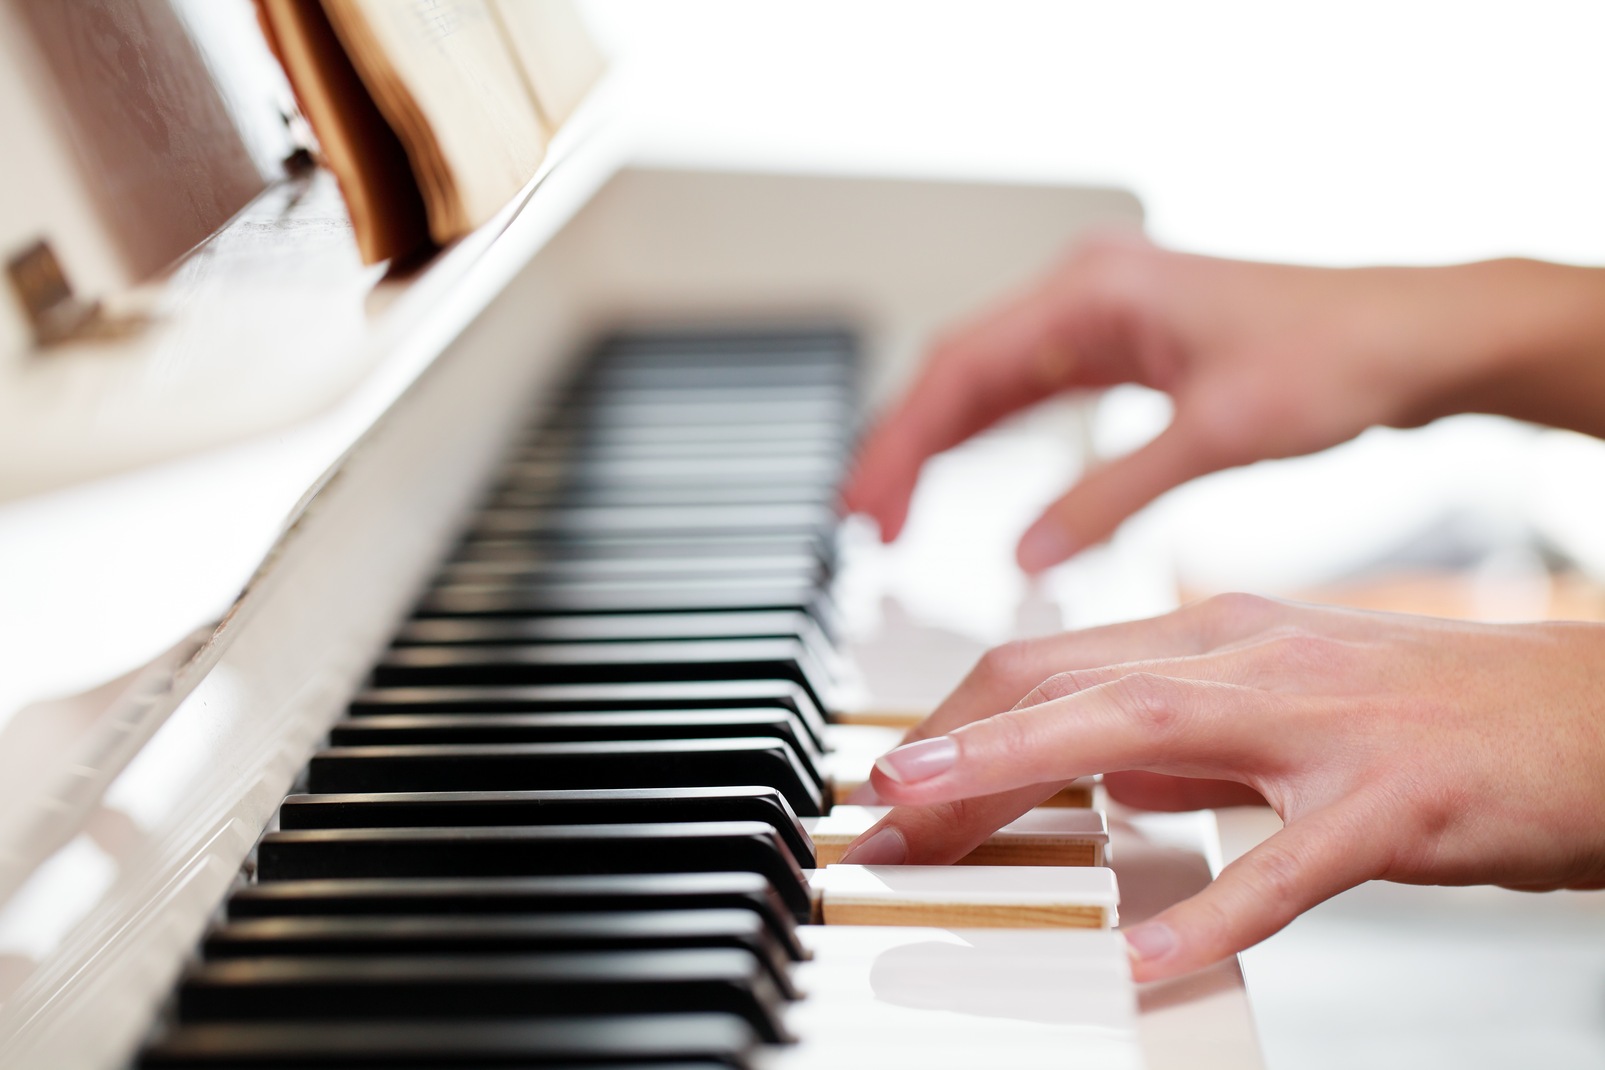 Музыка игра на фортепиано. Игра на фортепиано. Игра на фортепьяно. Руки на пианино. Играет на фортепиано.